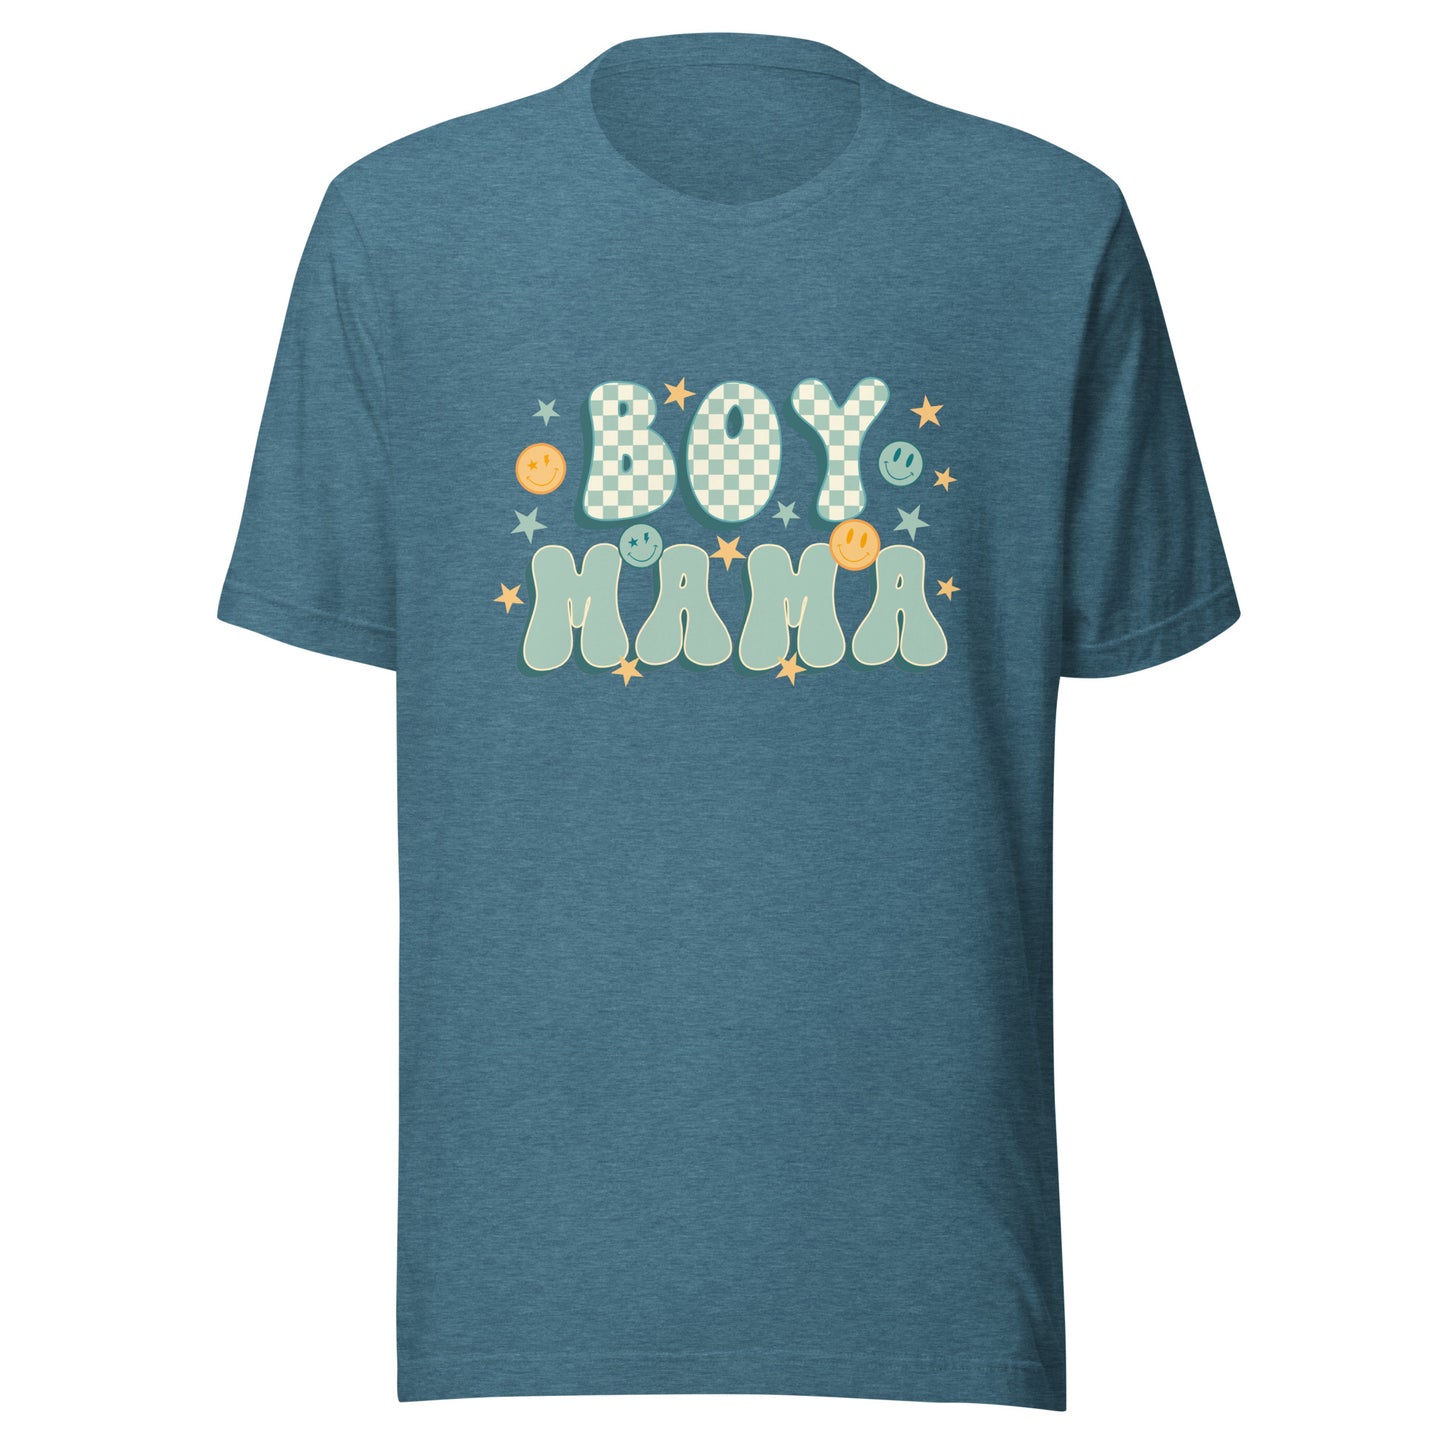 Boy mom t-shirt